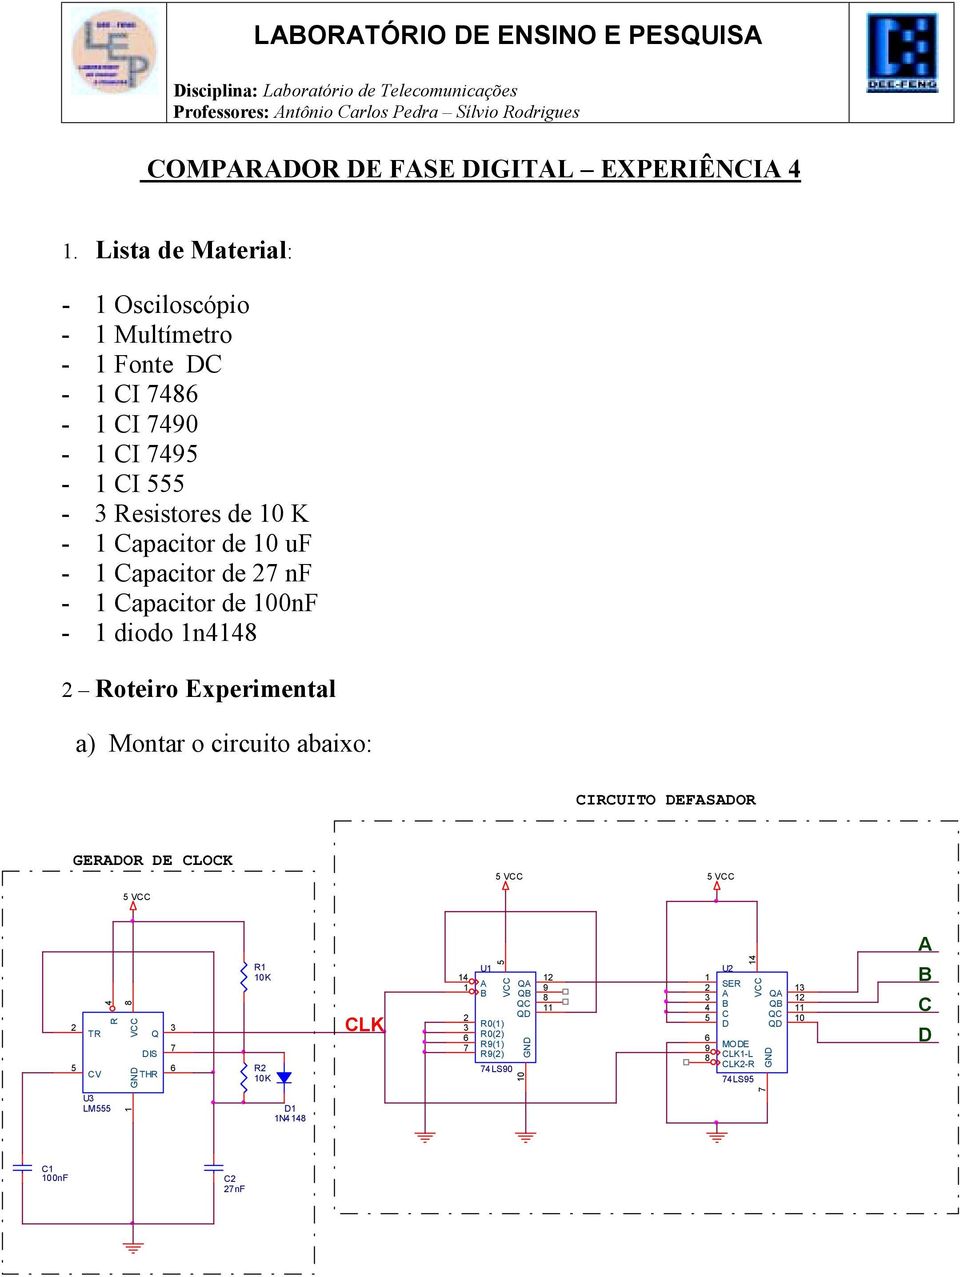 uf - Capacitor de nf - Capacitor de 00nF - diodo n448 Roteiro Experimental a) Montar o circuito abaixo: CIRCUITO DEFSDOR GERDOR DE